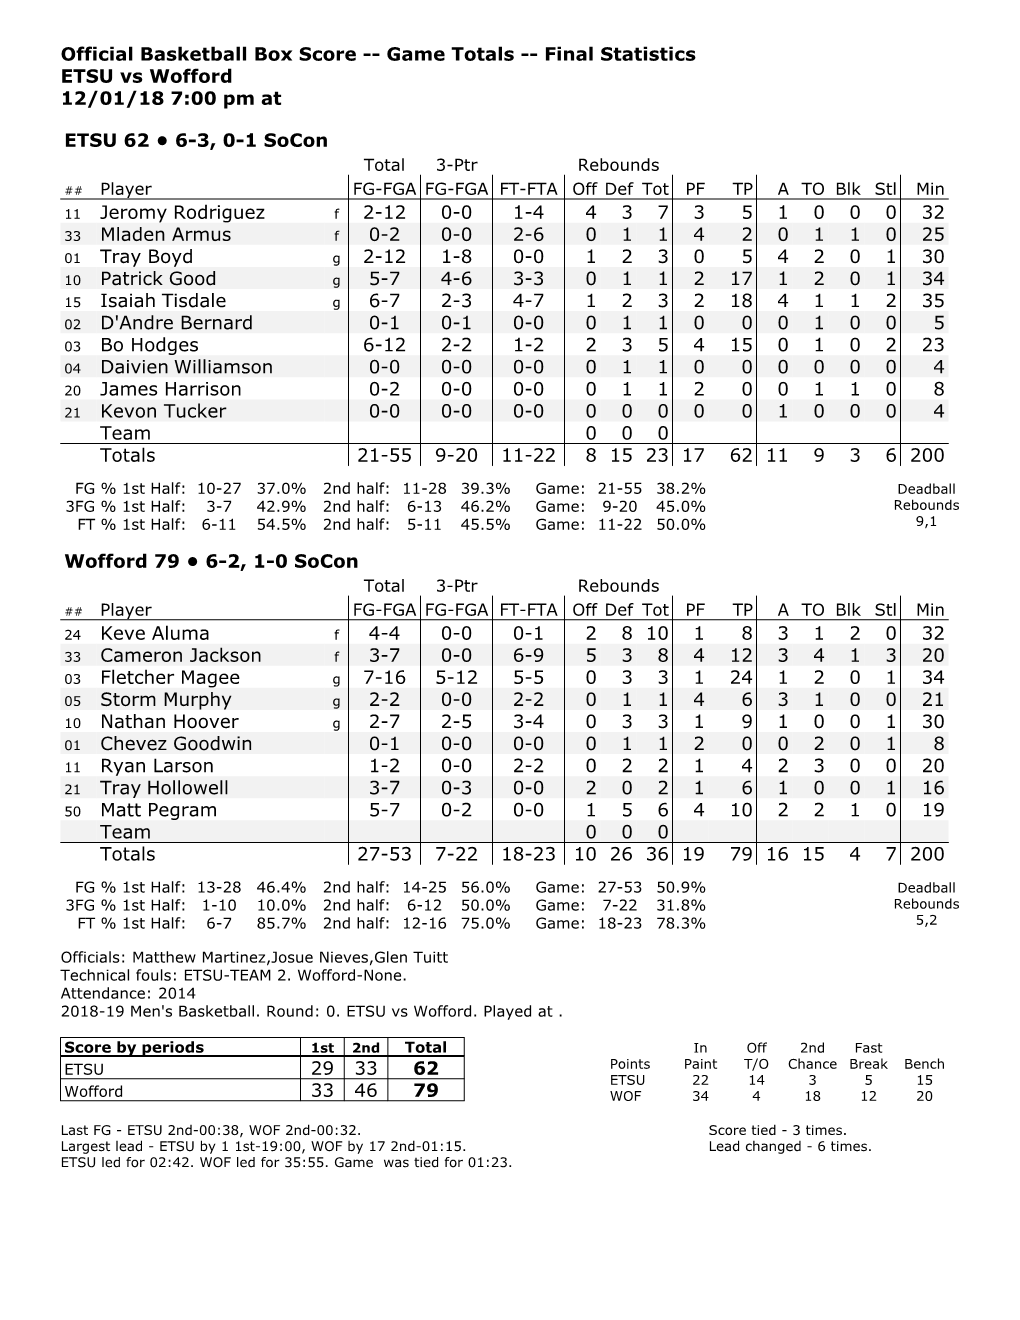 Official Basketball Box Score -- Game Totals -- Final Statistics ETSU Vs Wofford 12/01/18 7:00 Pm at ETSU 62 • 6-3, 0-1 Socon